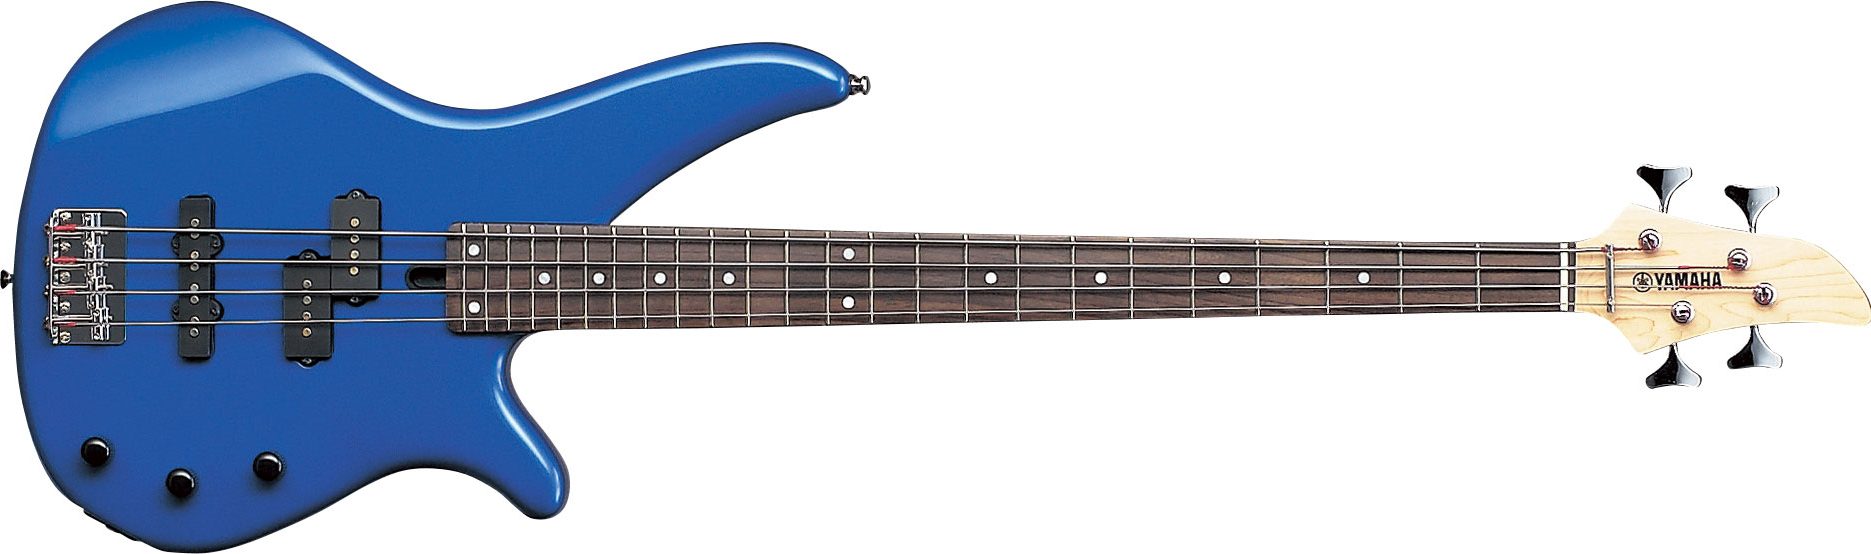 Blue electric bass guitar.